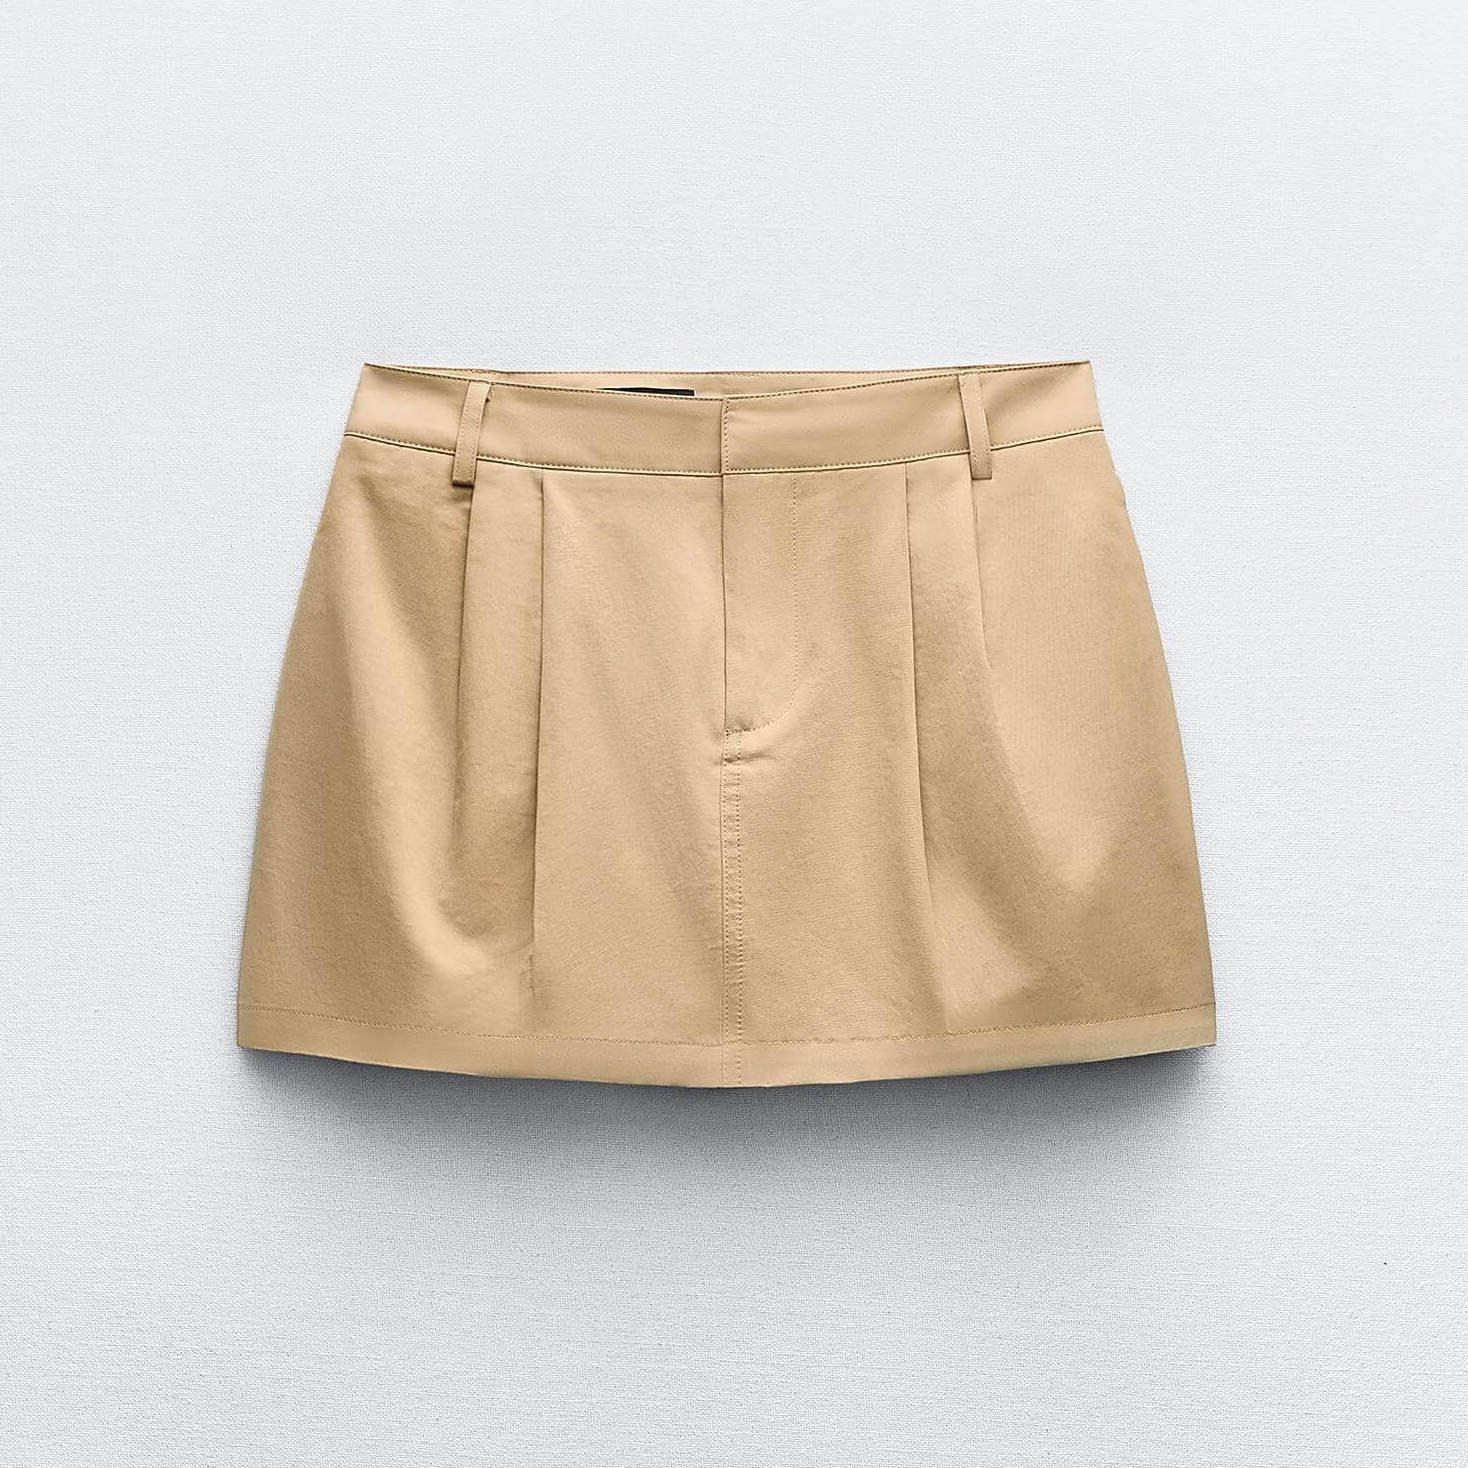 Юбка-мини Zara Pleated, желто-коричневый брюки полной длины zara желто коричневый